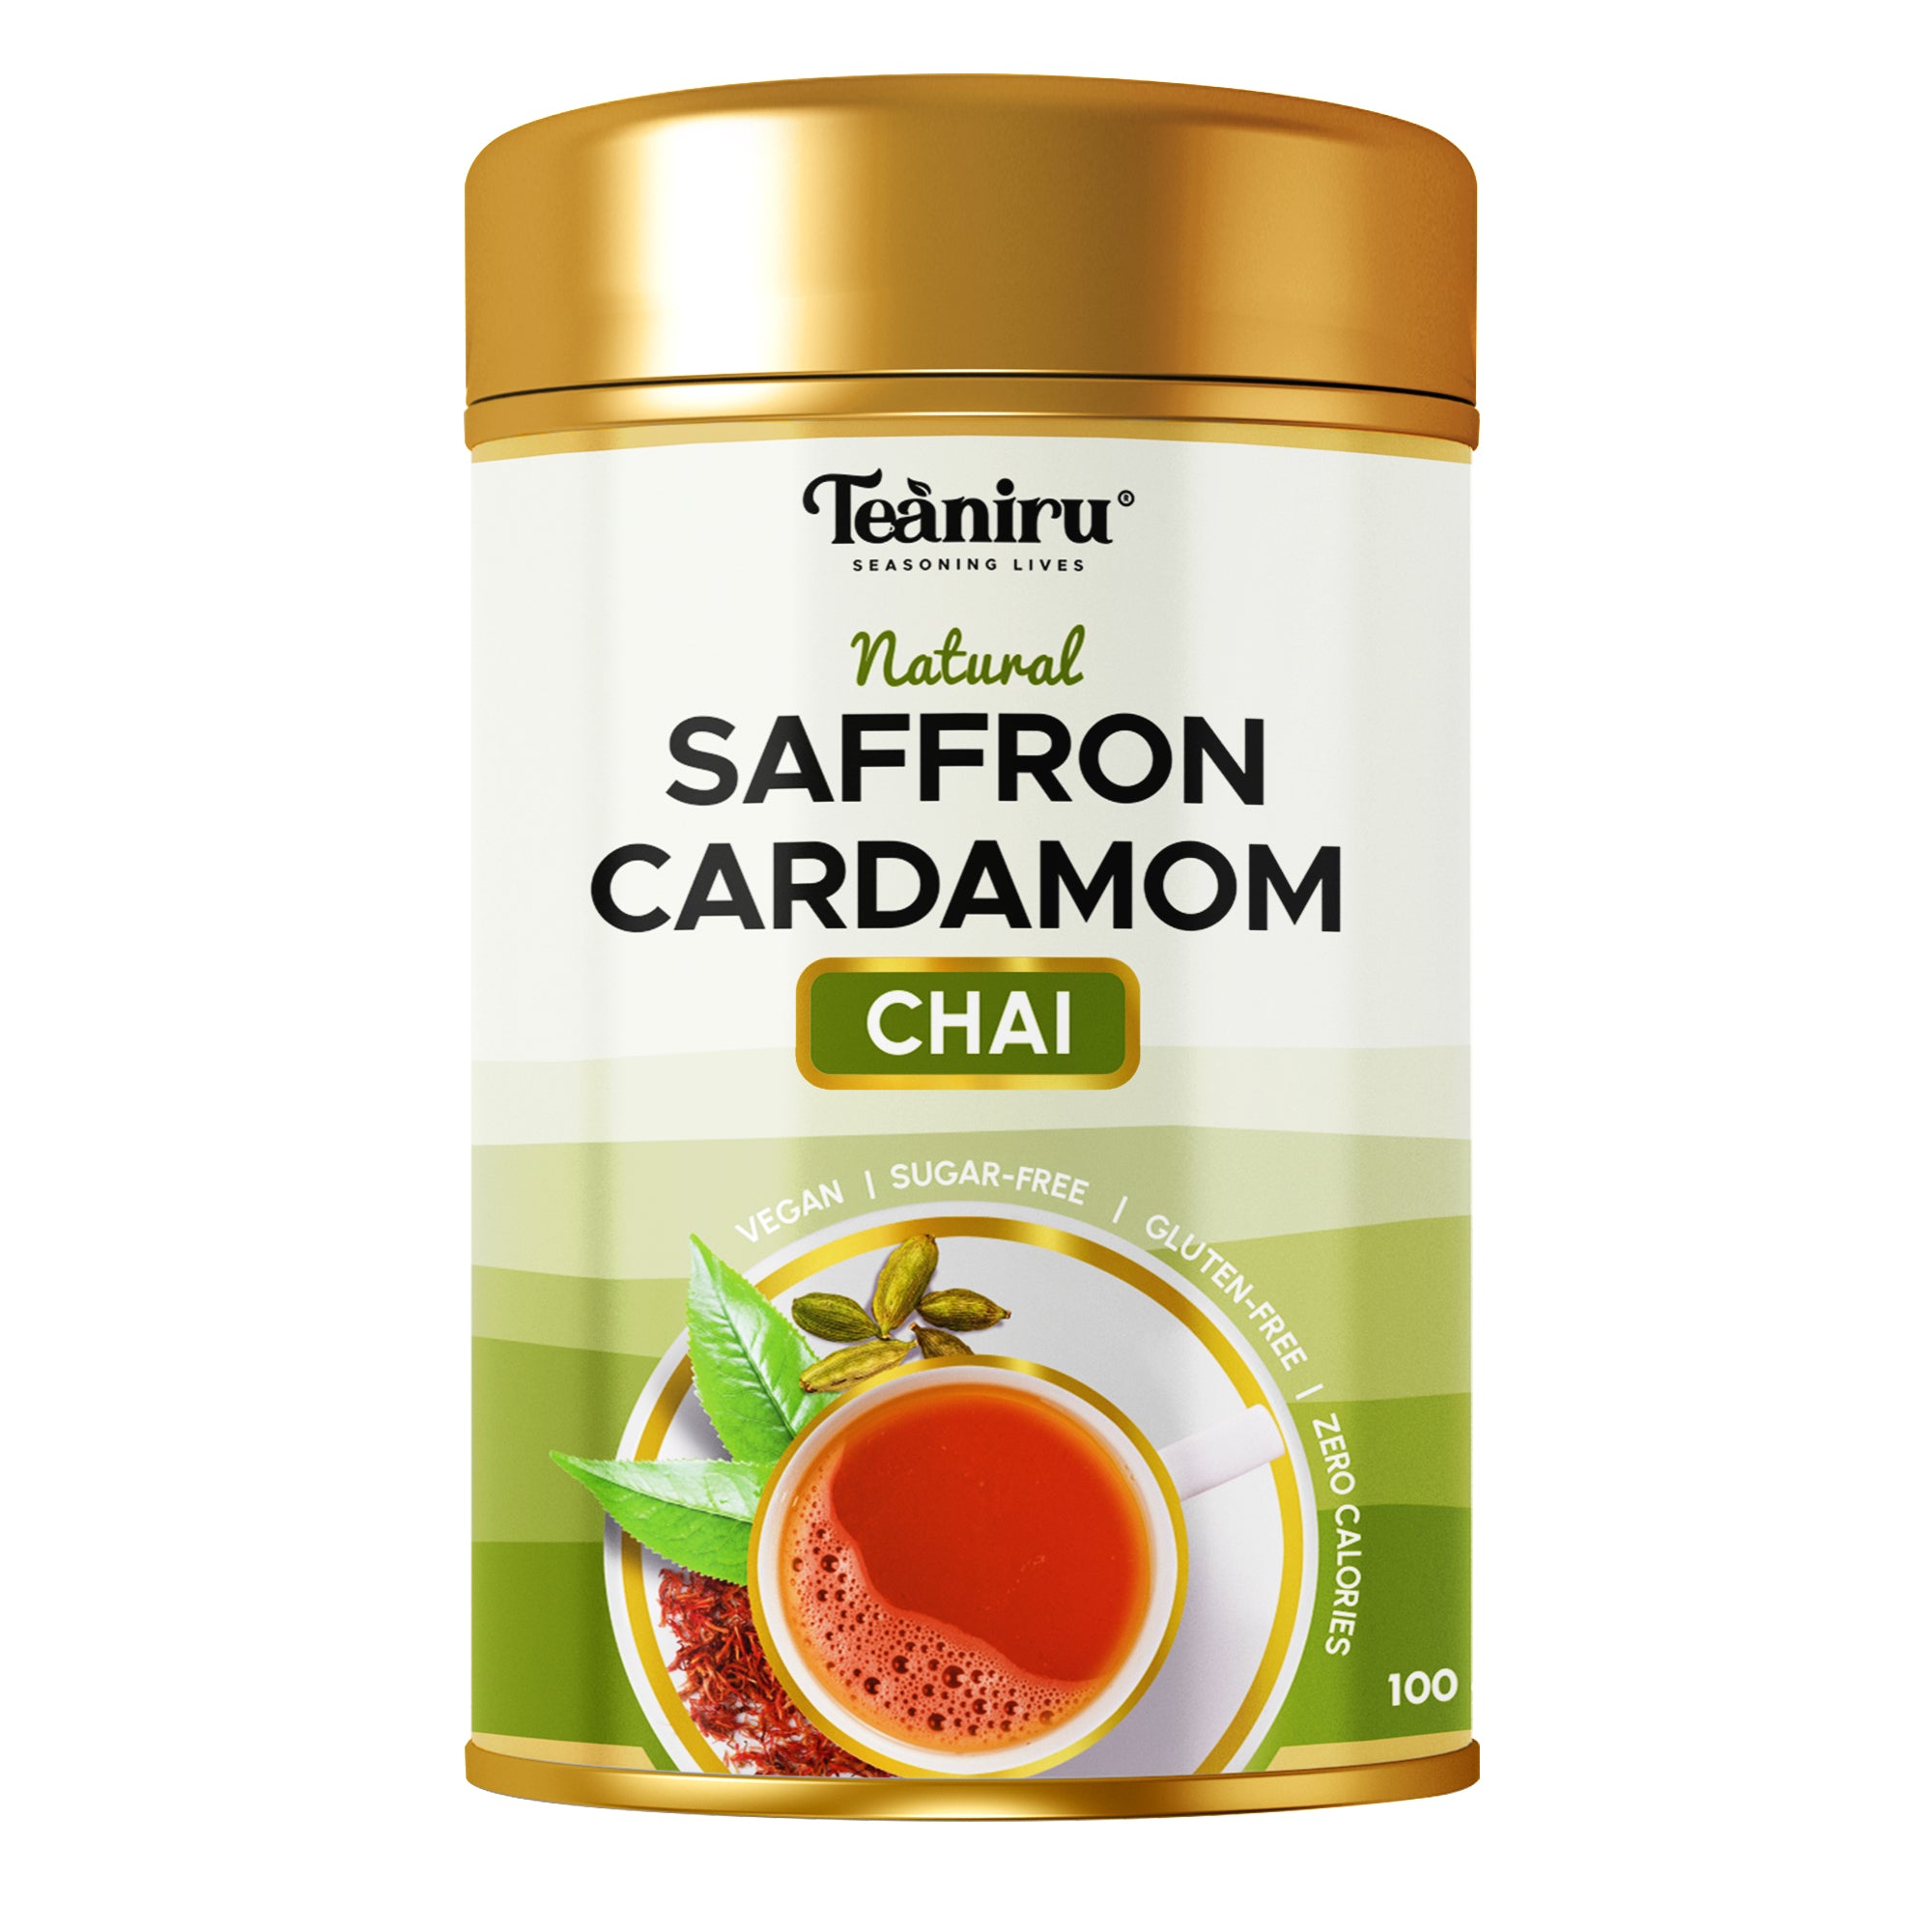 Saffron Cardamom Chai